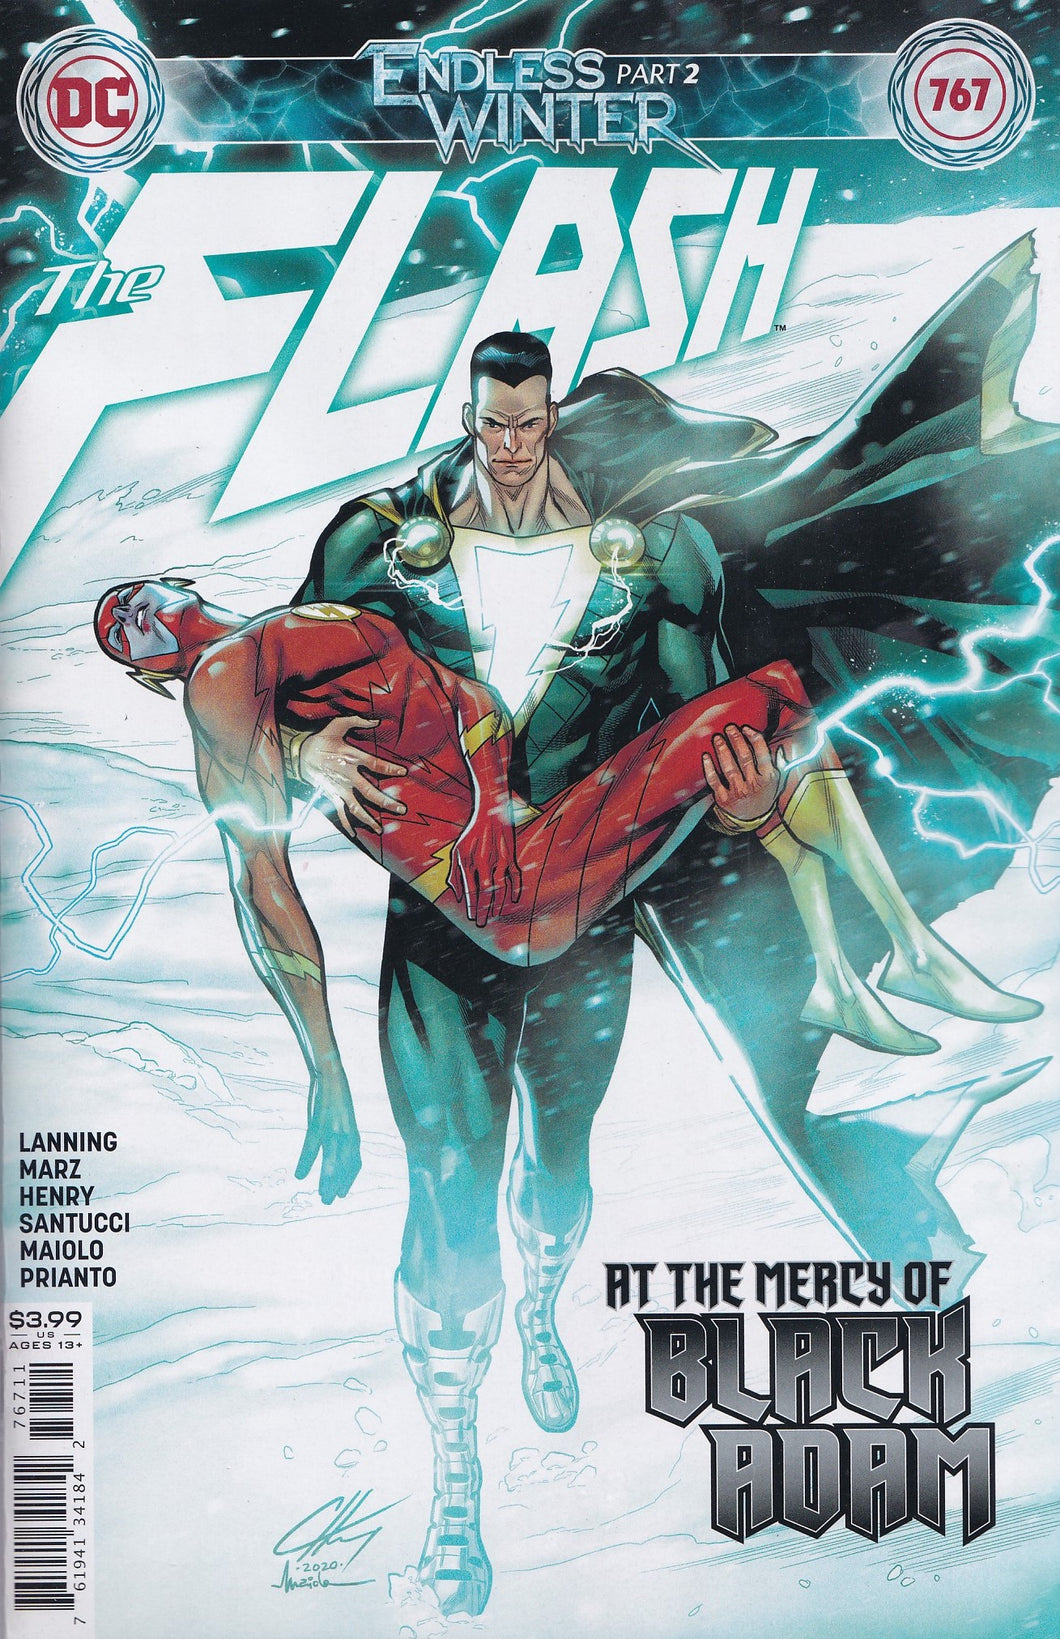 THE FLASH #767 (Clayton Henry Variant)(Endless Winter) COMIC BOOK ~ DC Comics